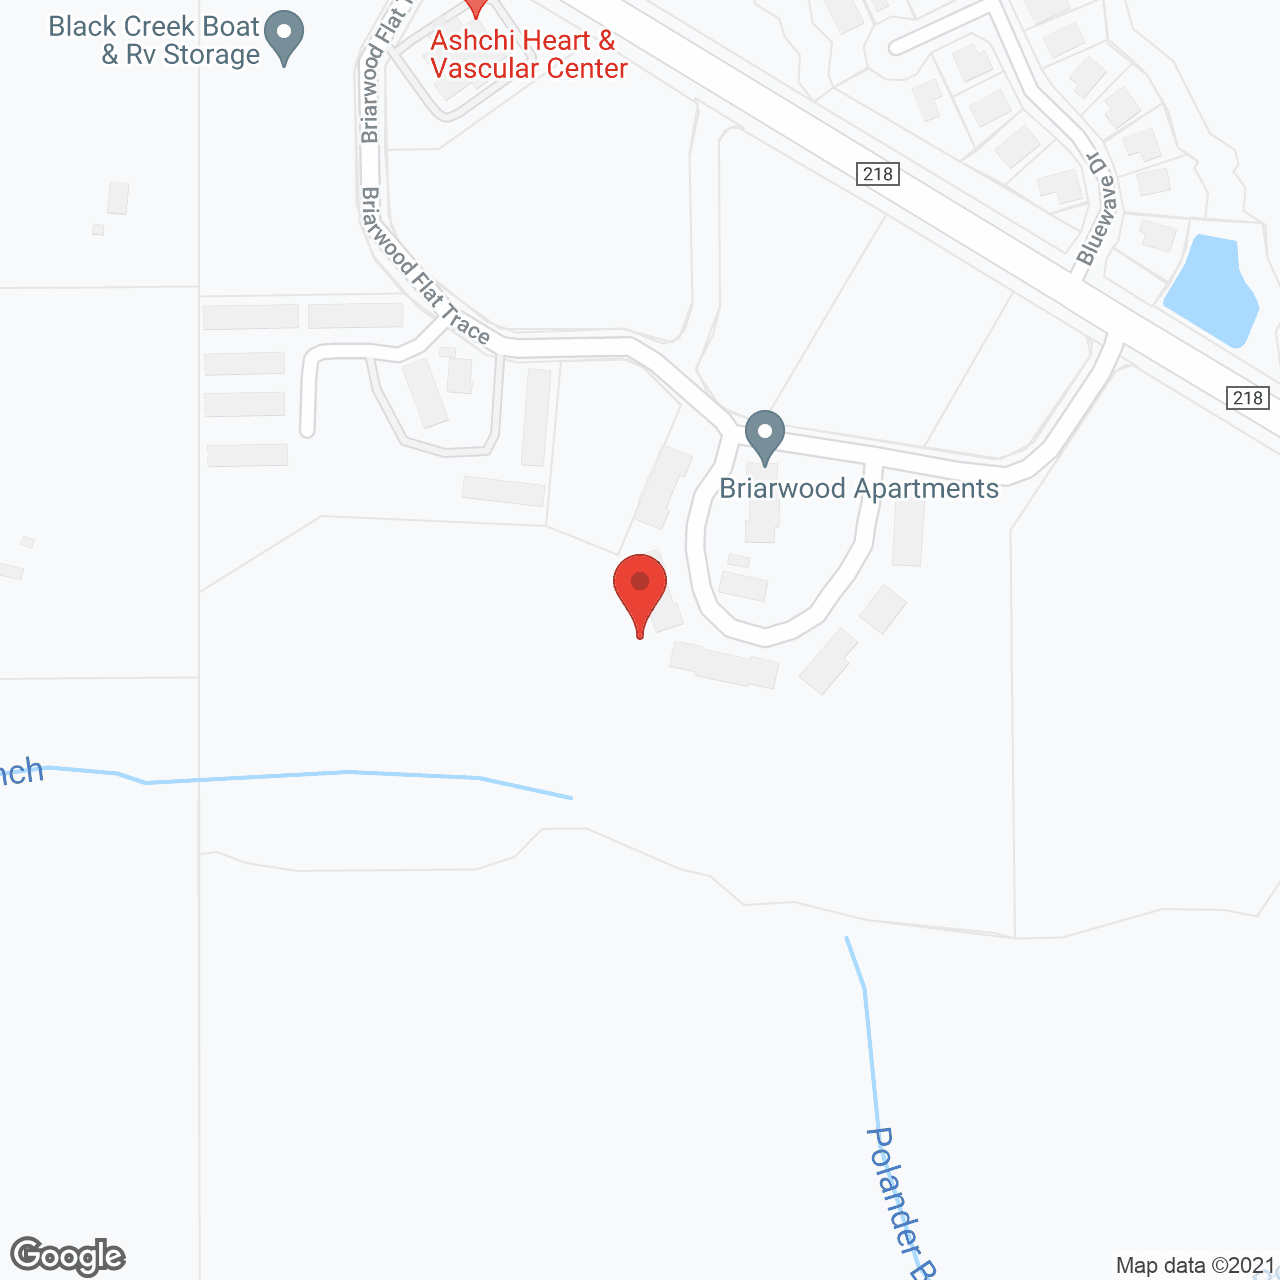 Briarwood Apartments in google map